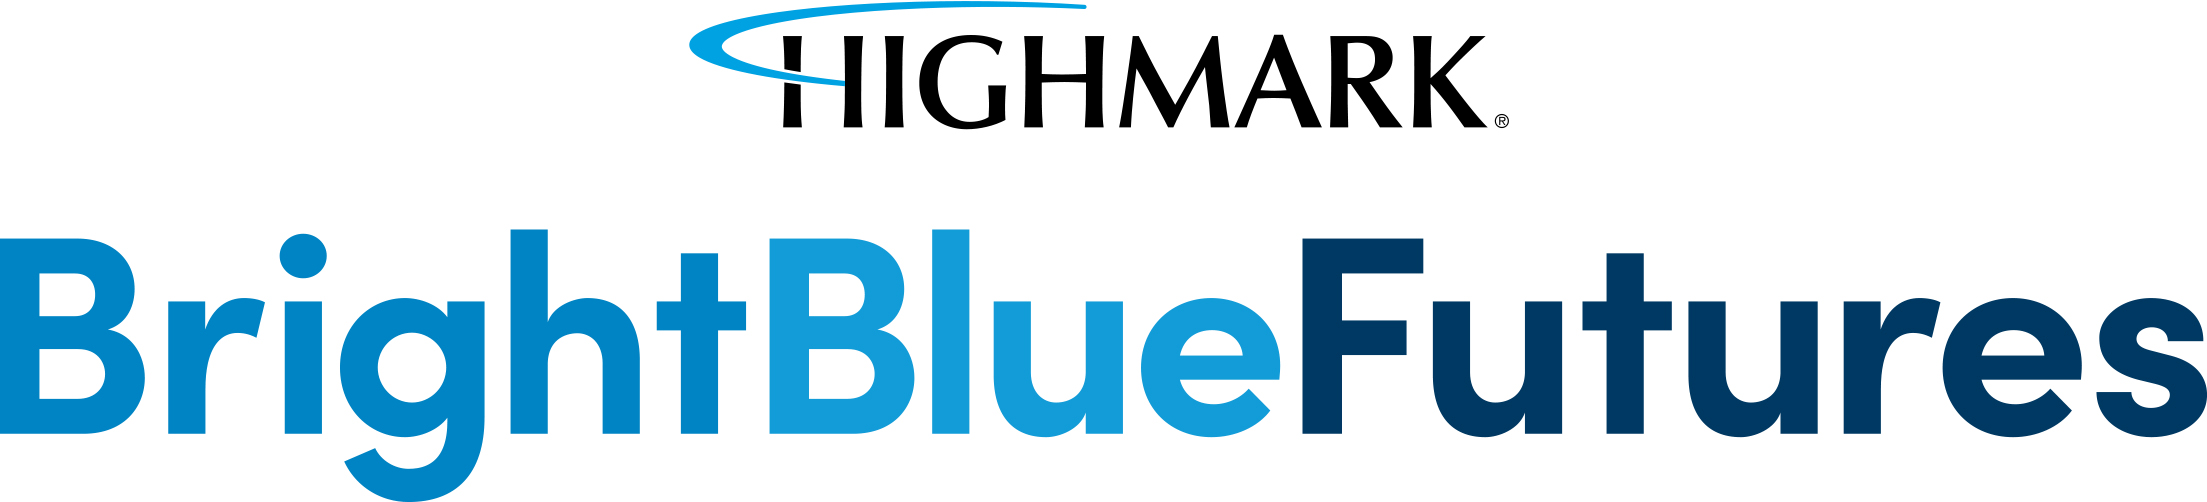 Highmark Bright Blue Futures Logo